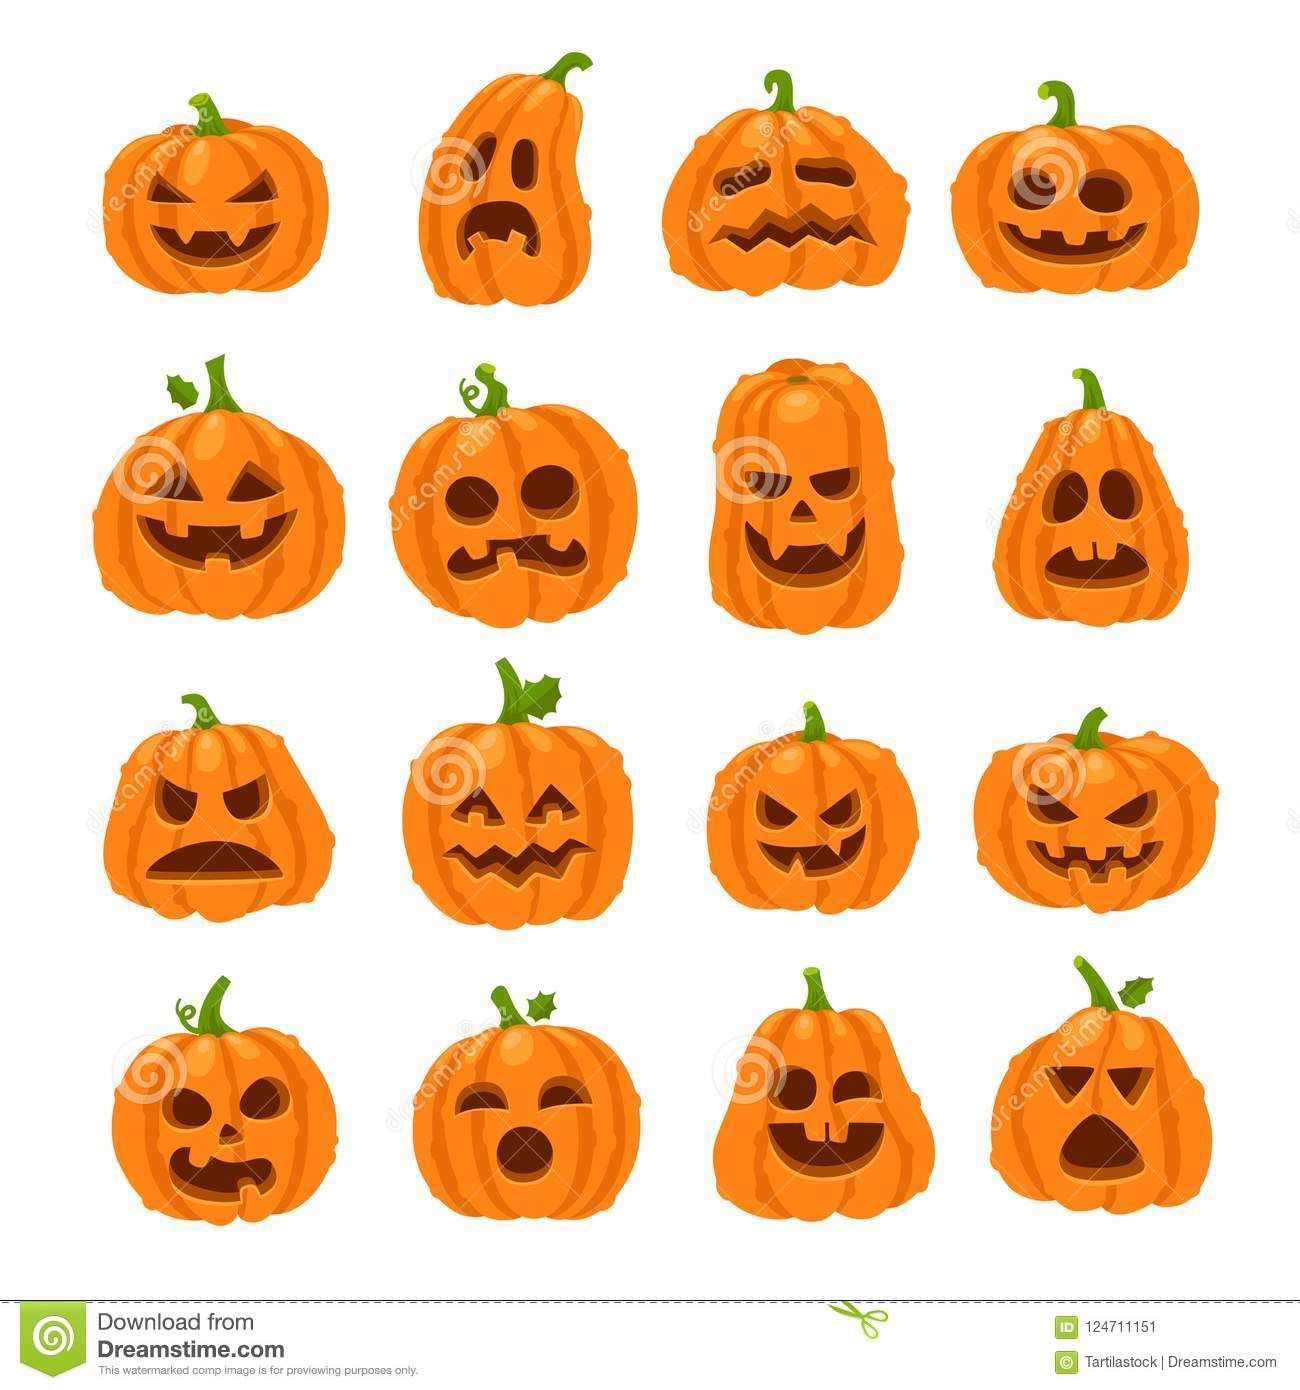 Cartoon Halloween Pumpkin. Orange Pumpkins With Carving Scary Smiling Faces.